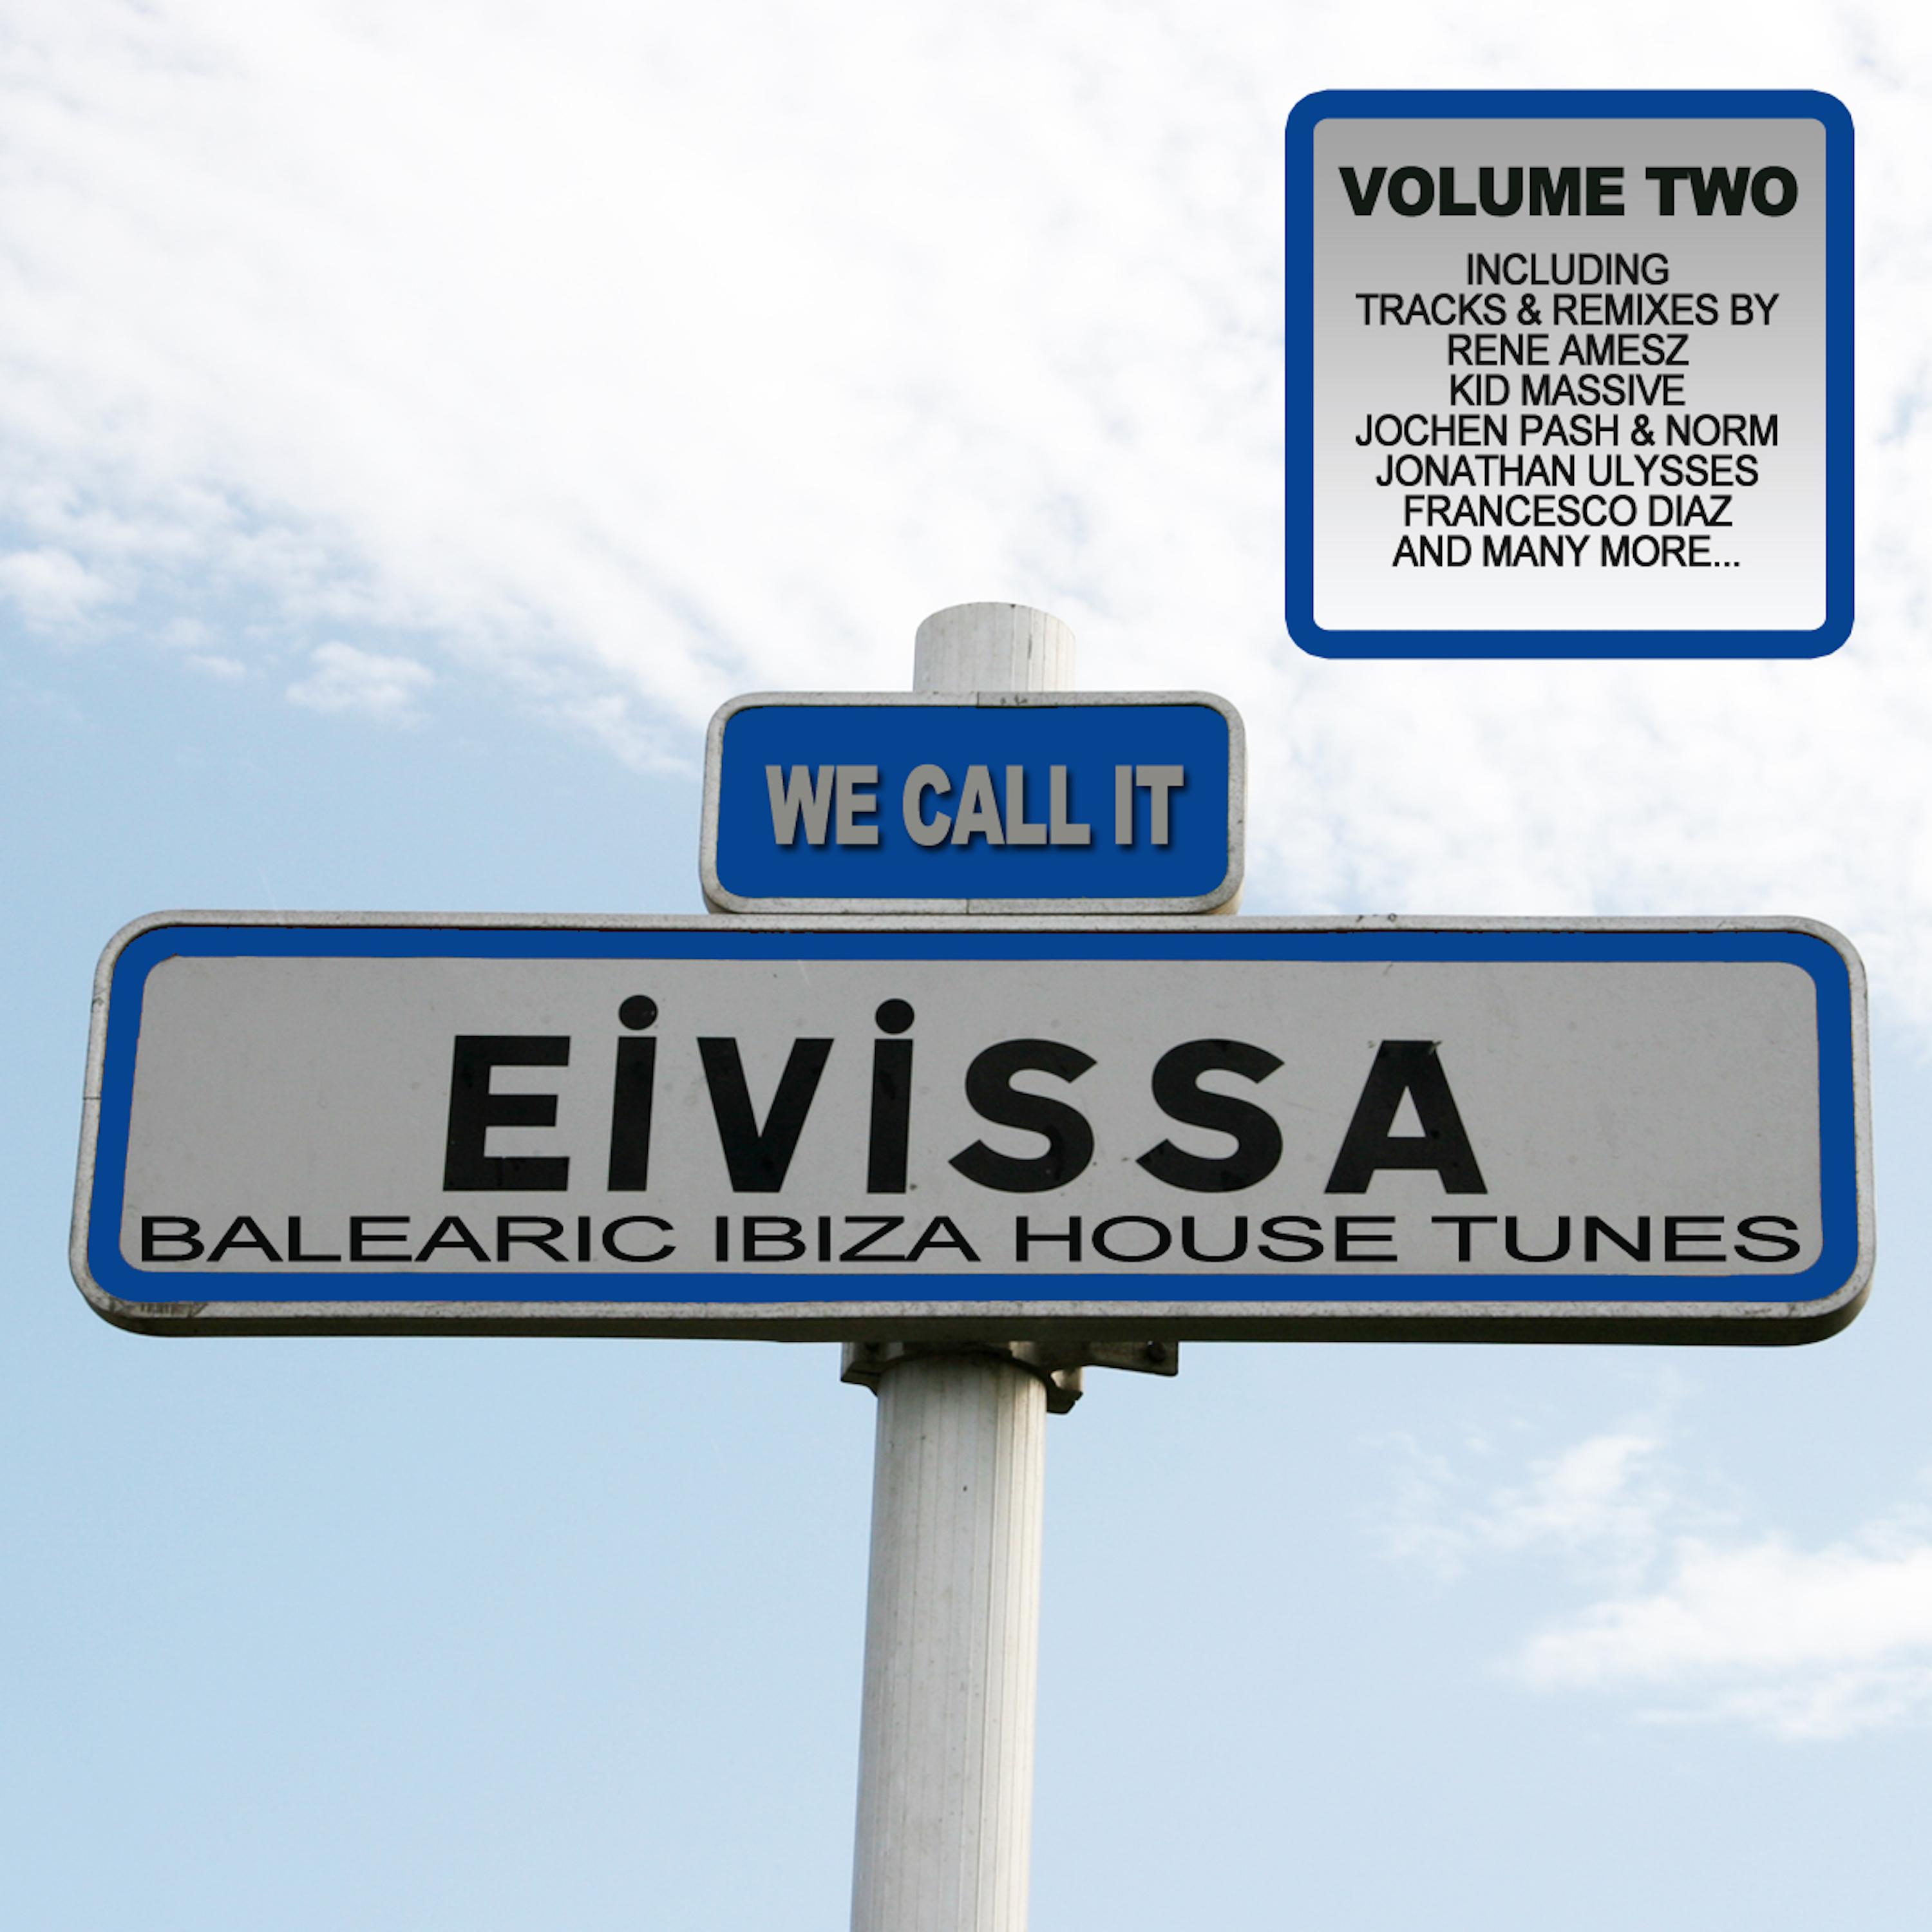 We Call It Evissa Vol. 2 - Balearic Ibiza House Tunes